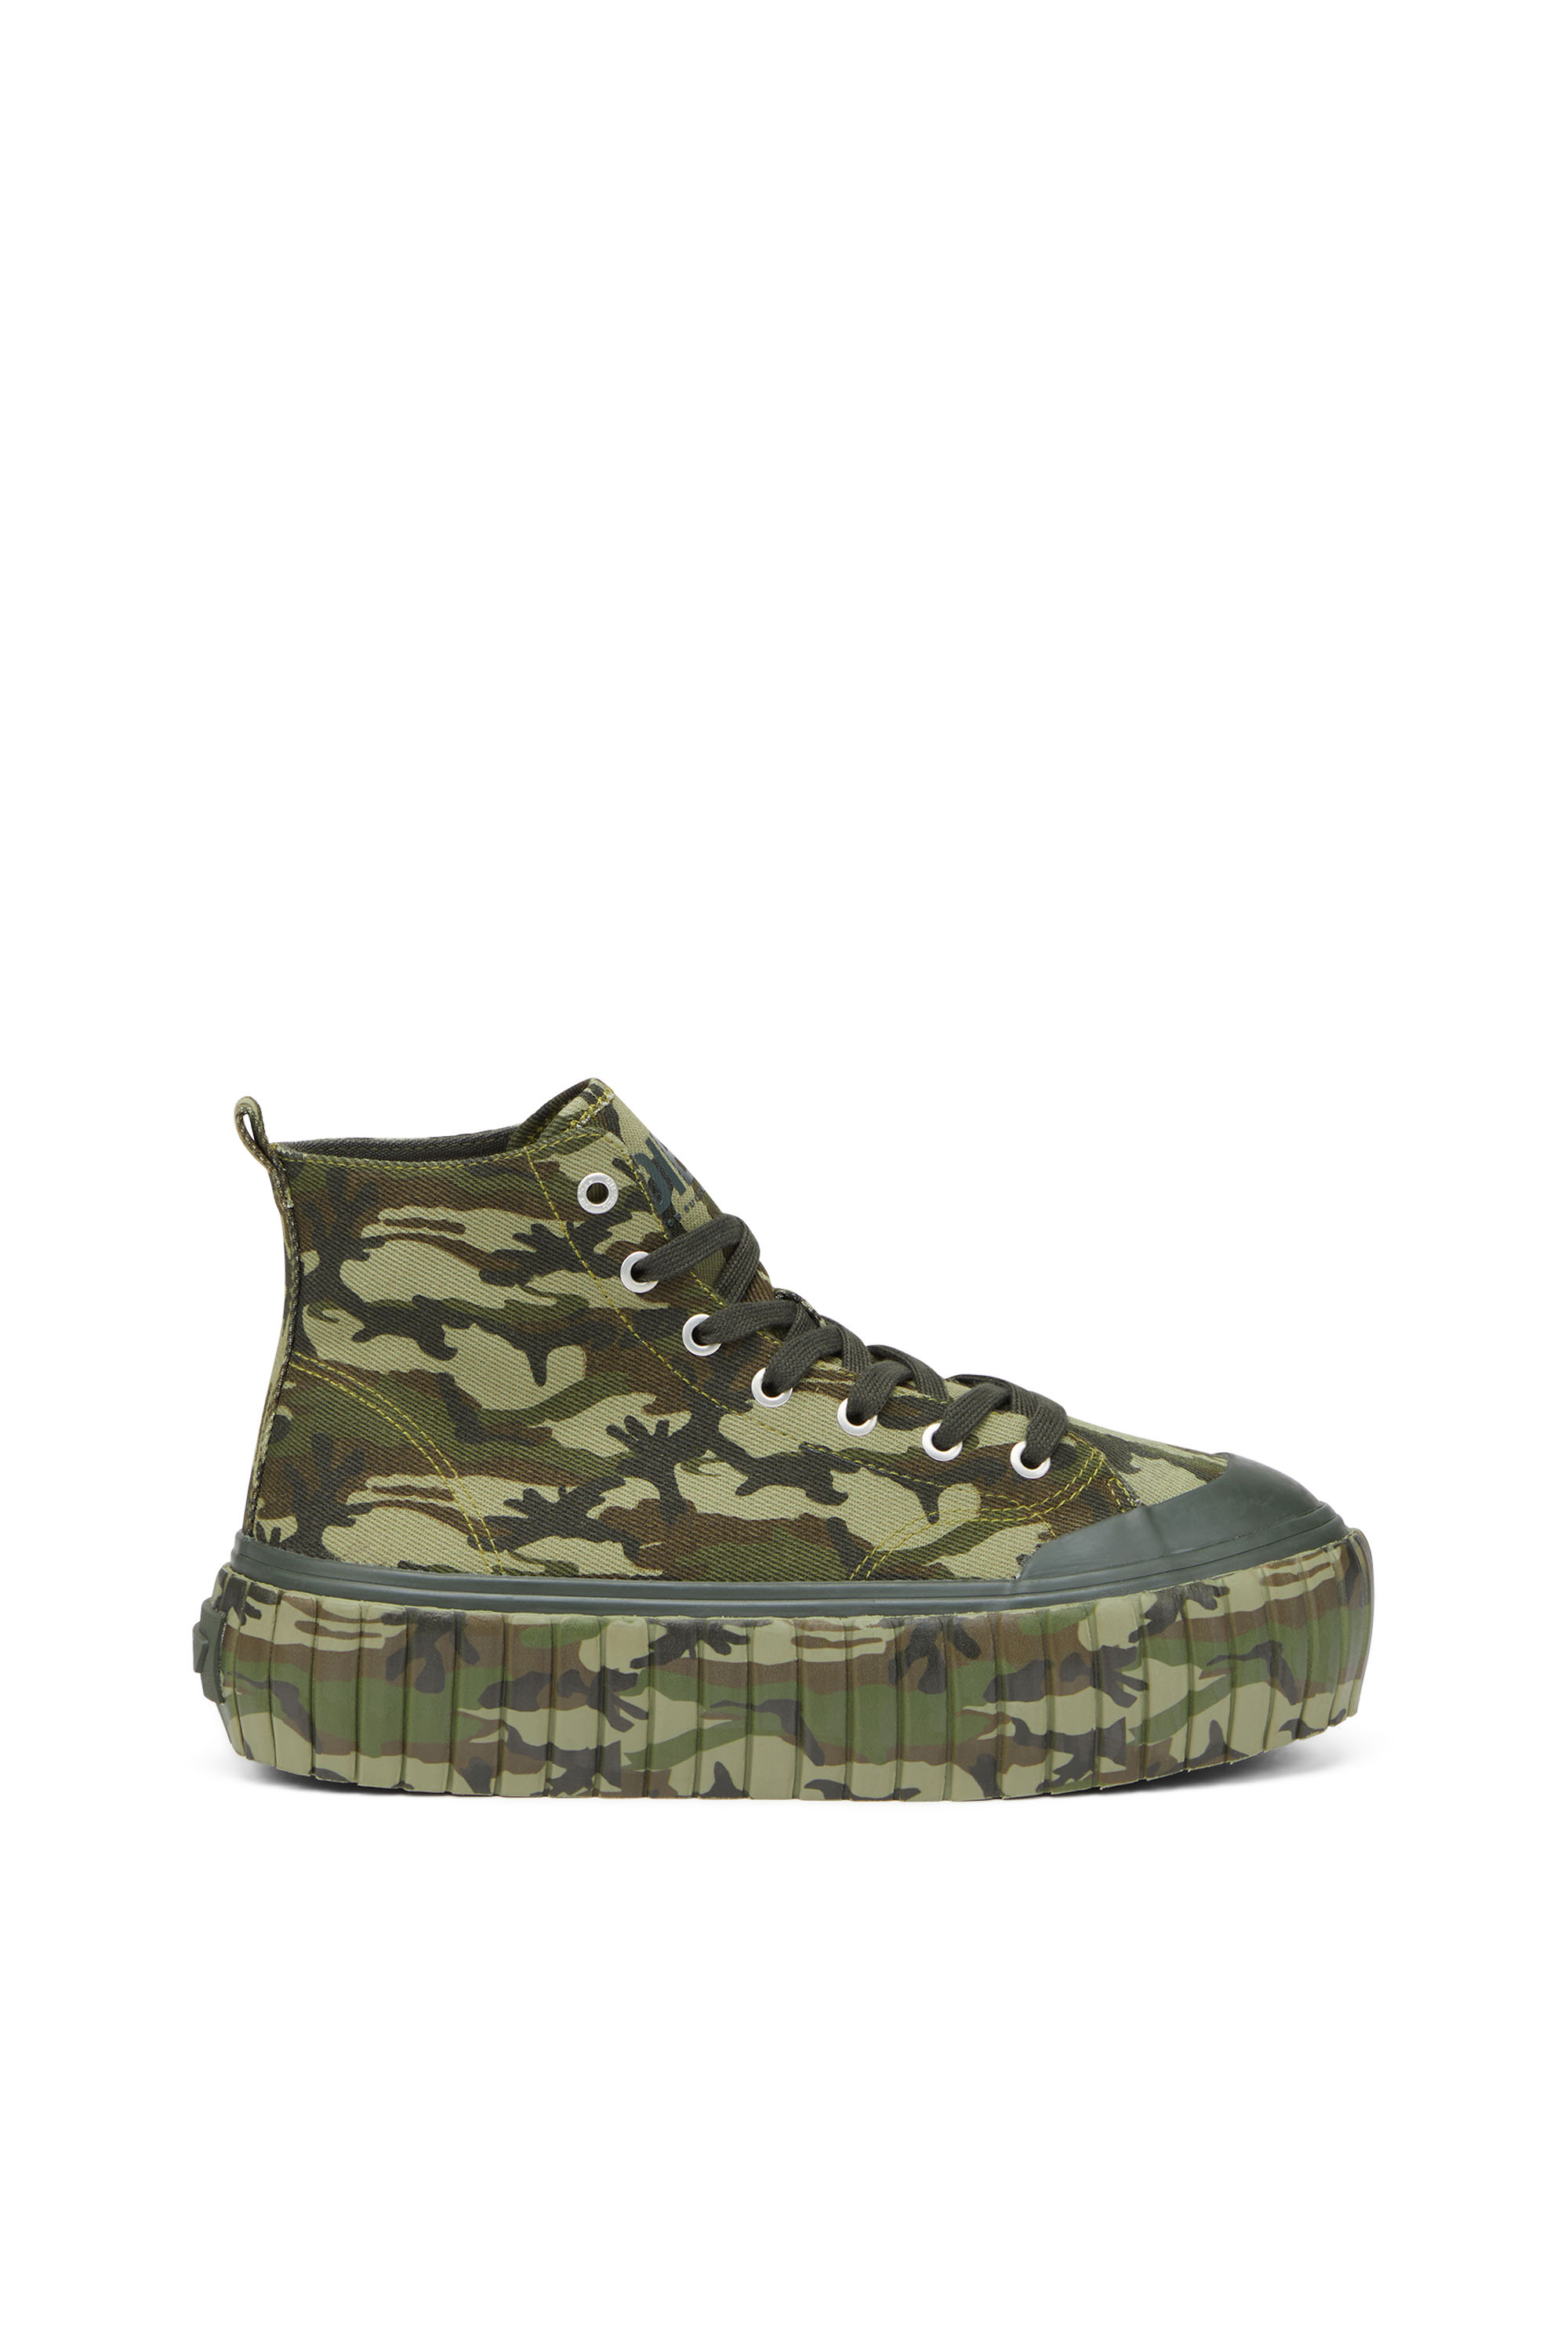 Diesel - Sneaker platform alte con motivo camouflage - Sneakers - Donna - Verde